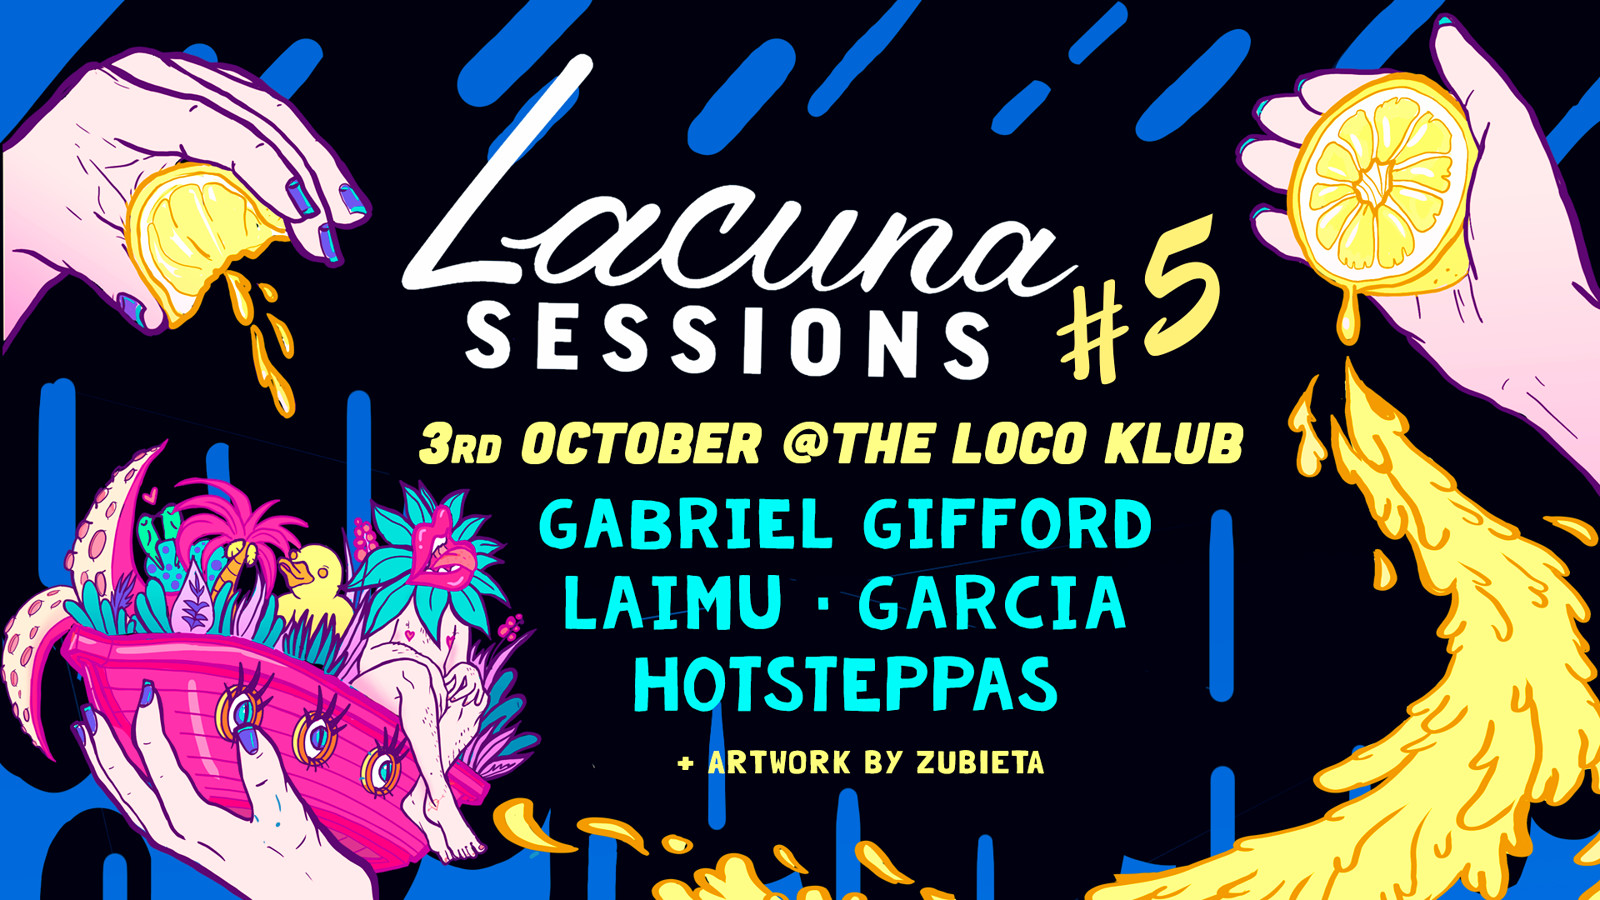 Lacuna Sessions - Laimu/Hotsteppas/Garcia at The Loco Klub